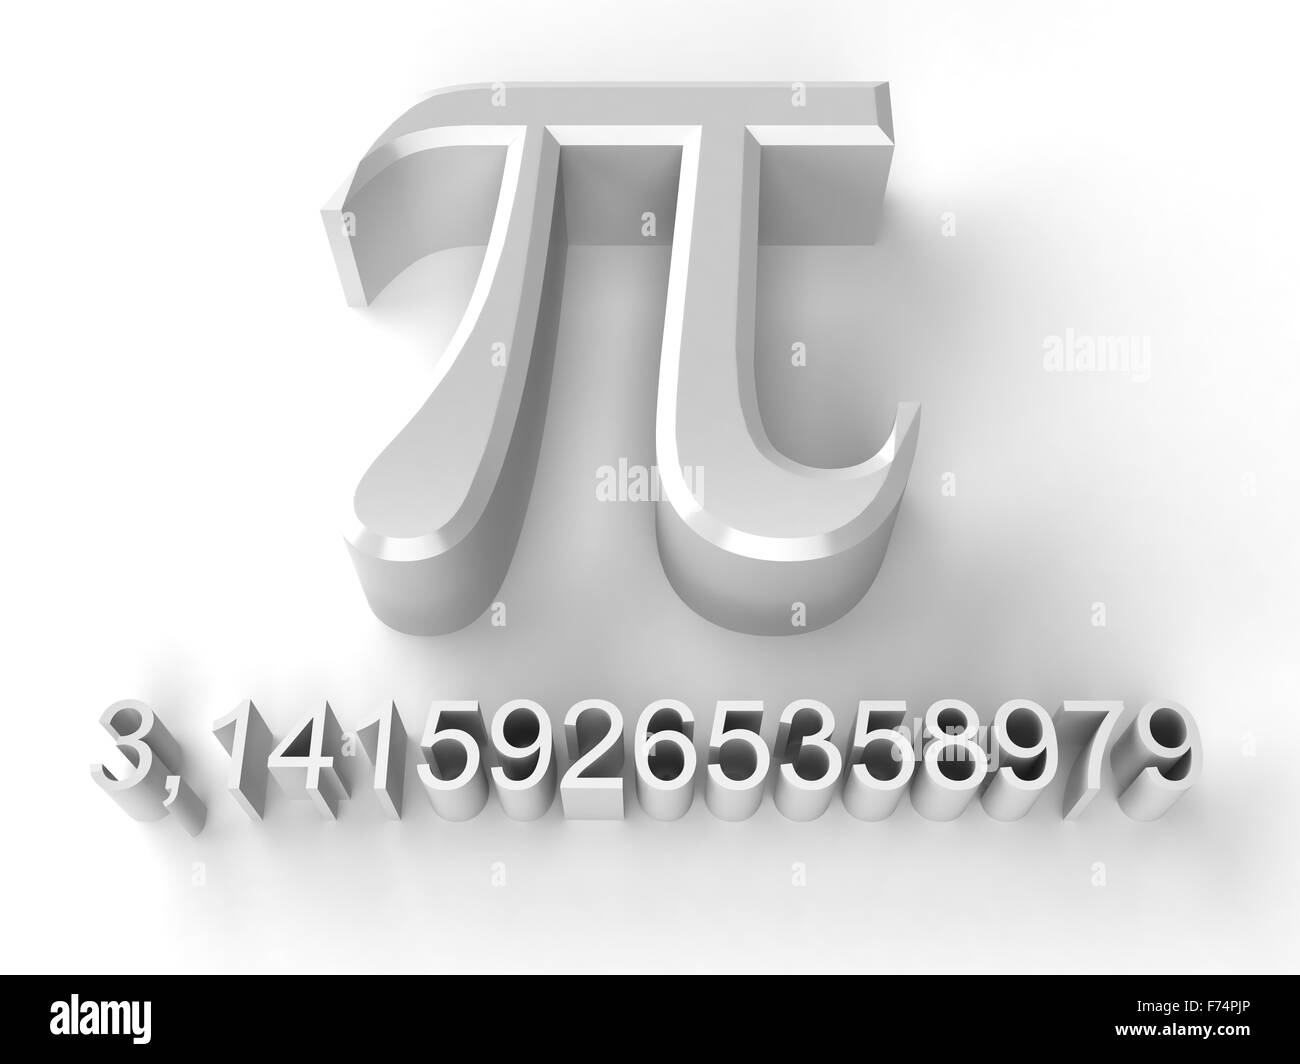 pi on a white background Stock Photo